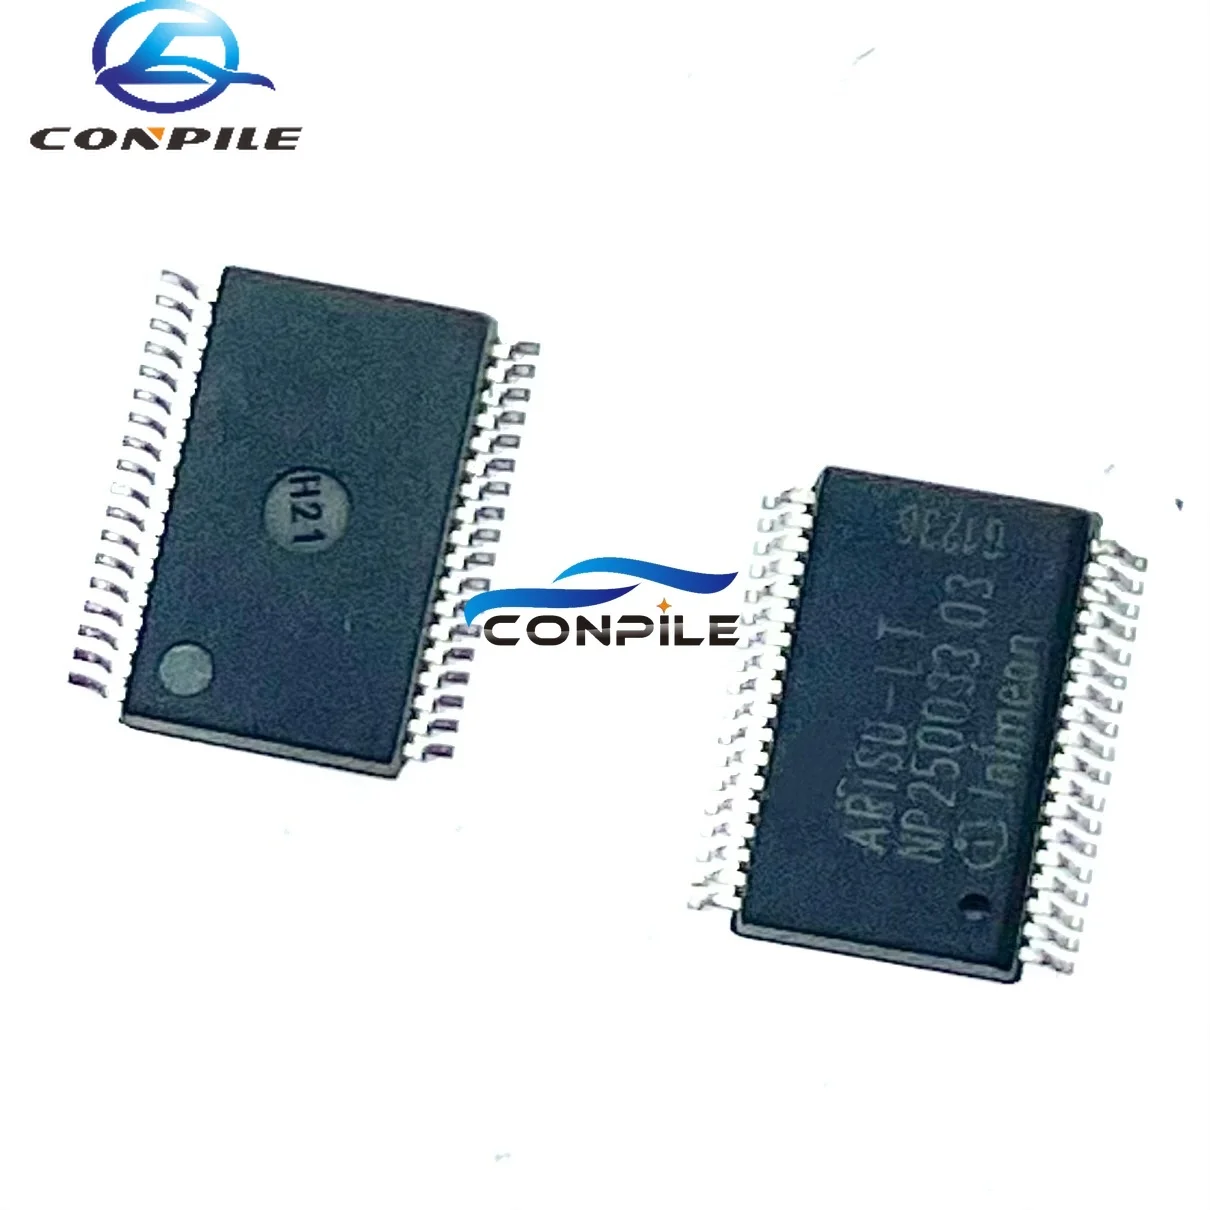 

2pcs ARISU-LT for Hyundai IX25 brake light for Peugeot turn signal IC control chip transponder